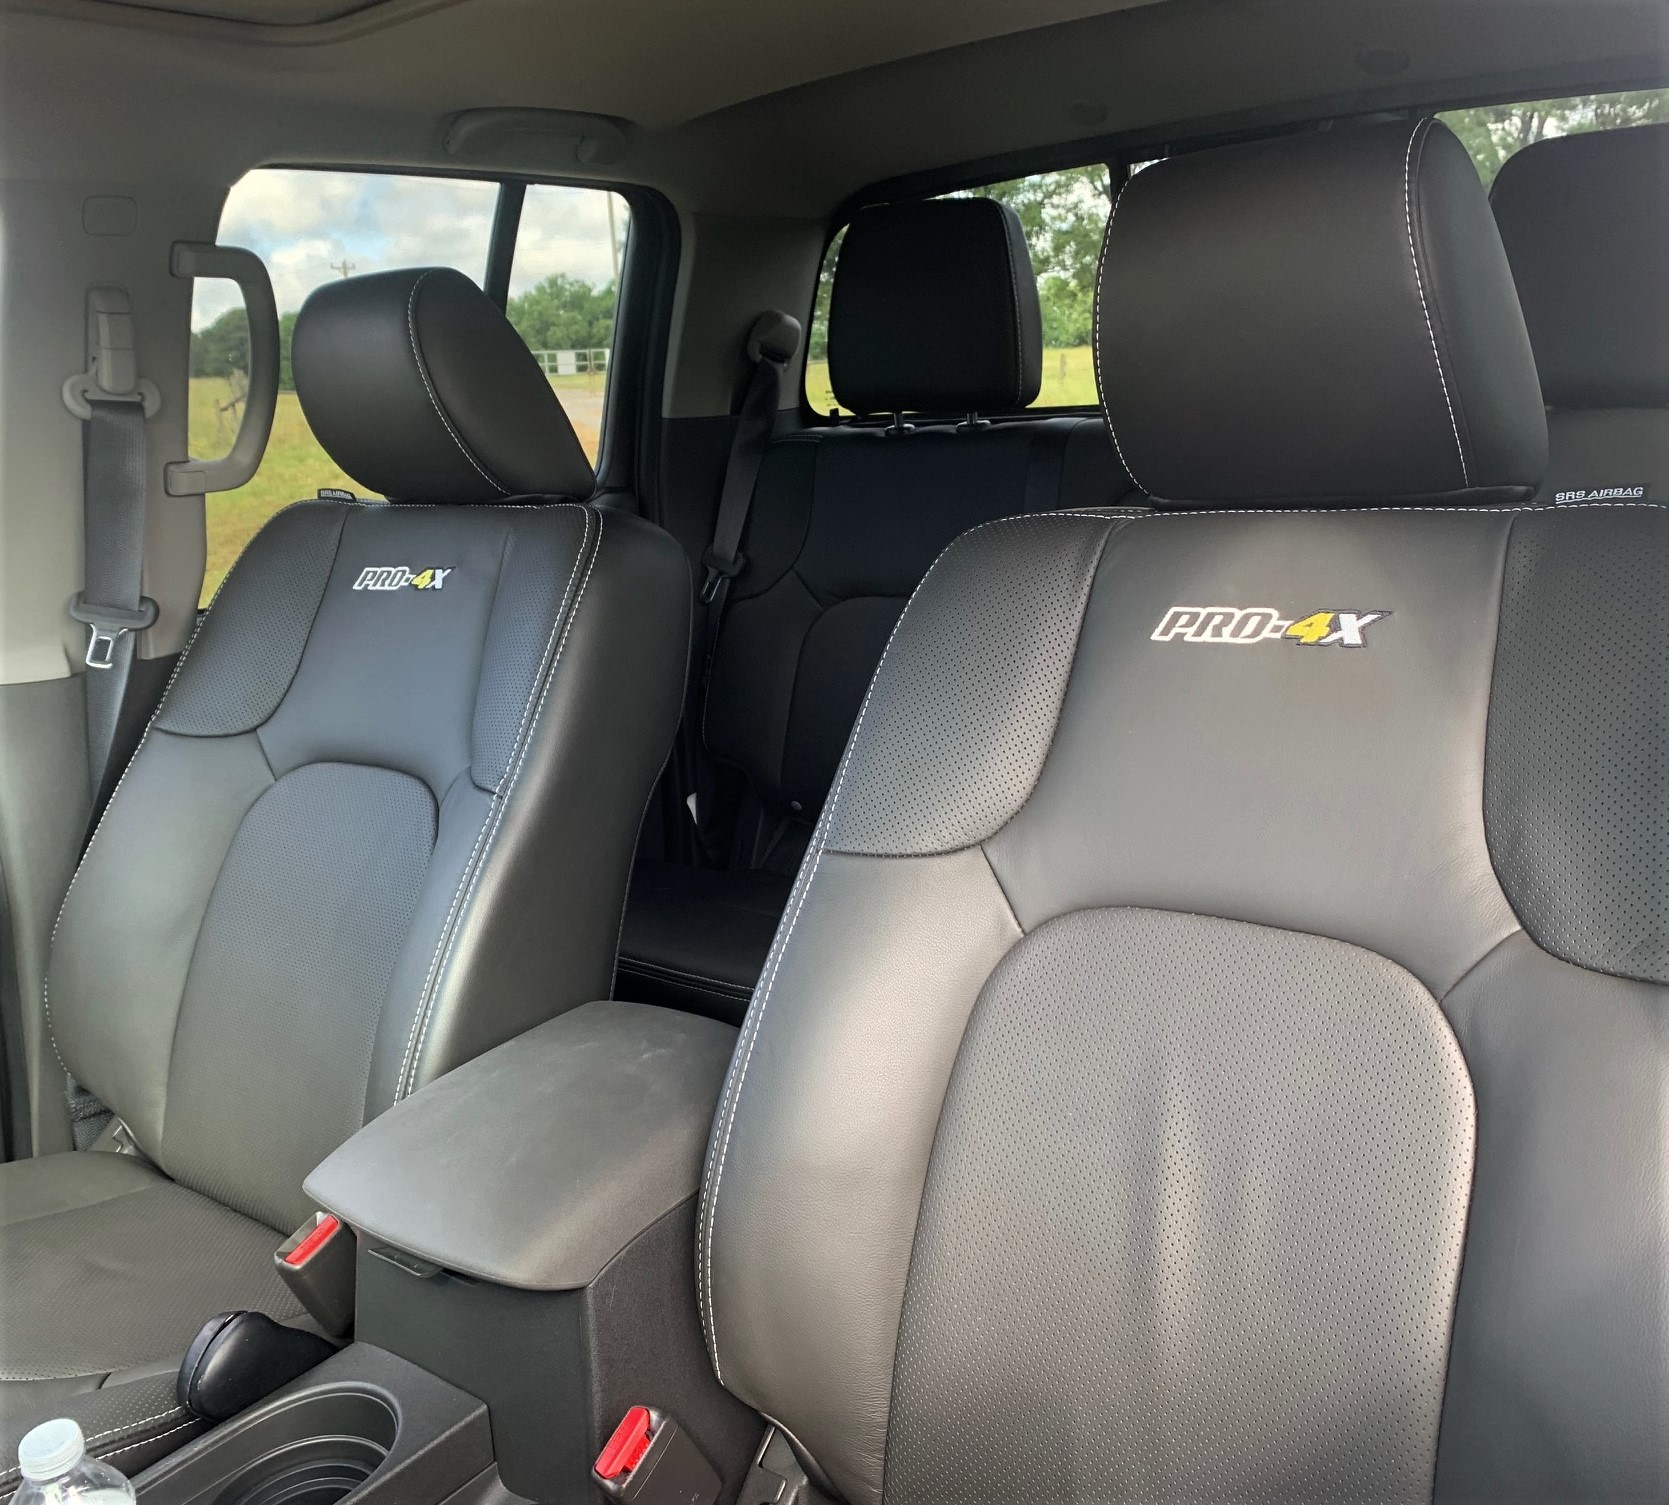 2020 Nissan Frontier seat